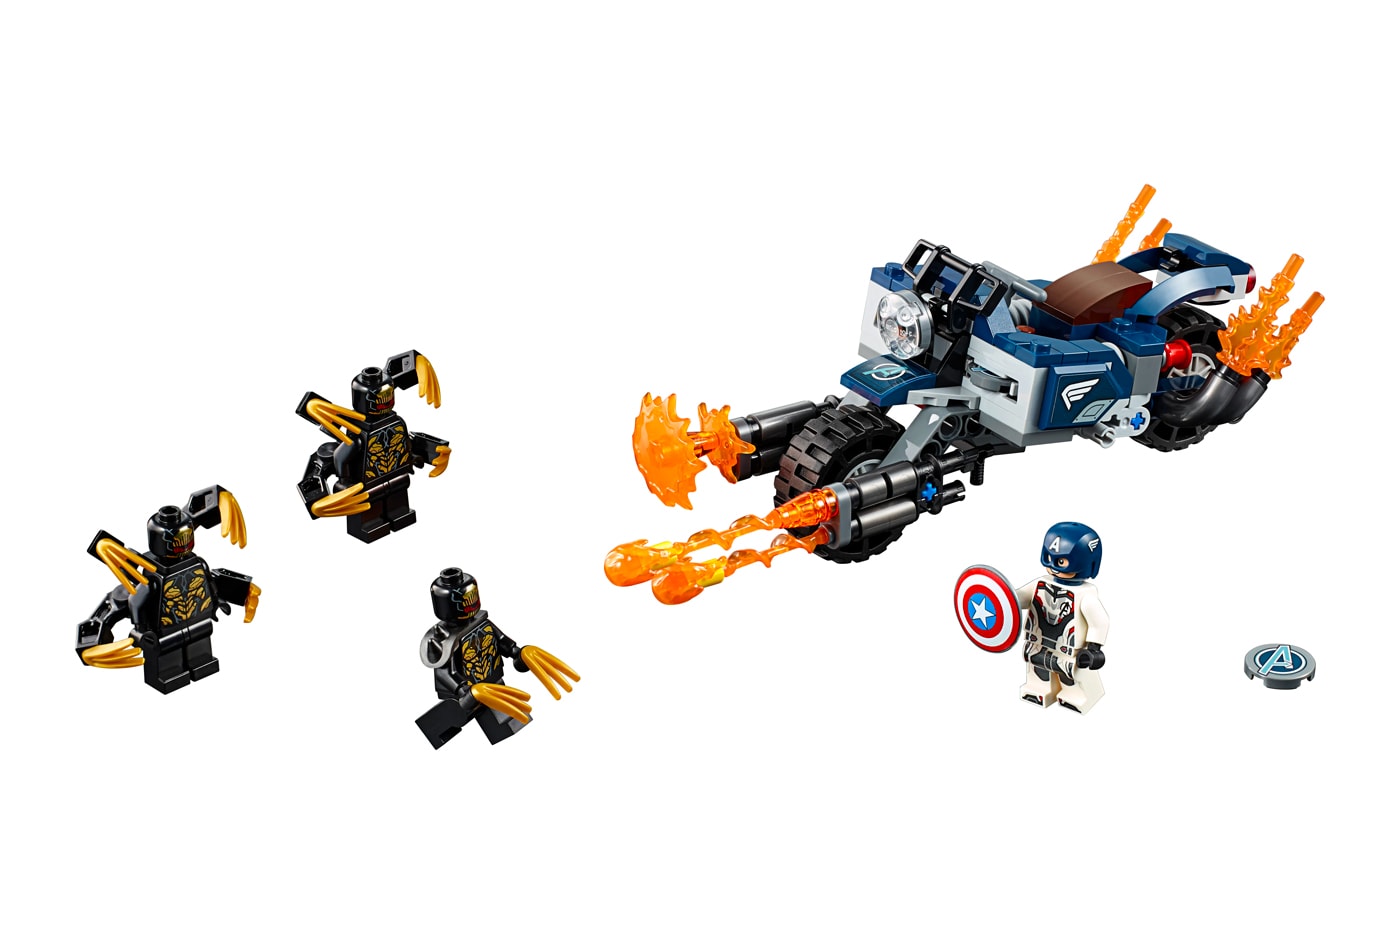 LEGO 'Avengers: Endgame' Series Hong Kong Release marvel studios ironman captain america hulk thanos guardians of the galaxy captain marvel toy collectible figurine memorabilia 